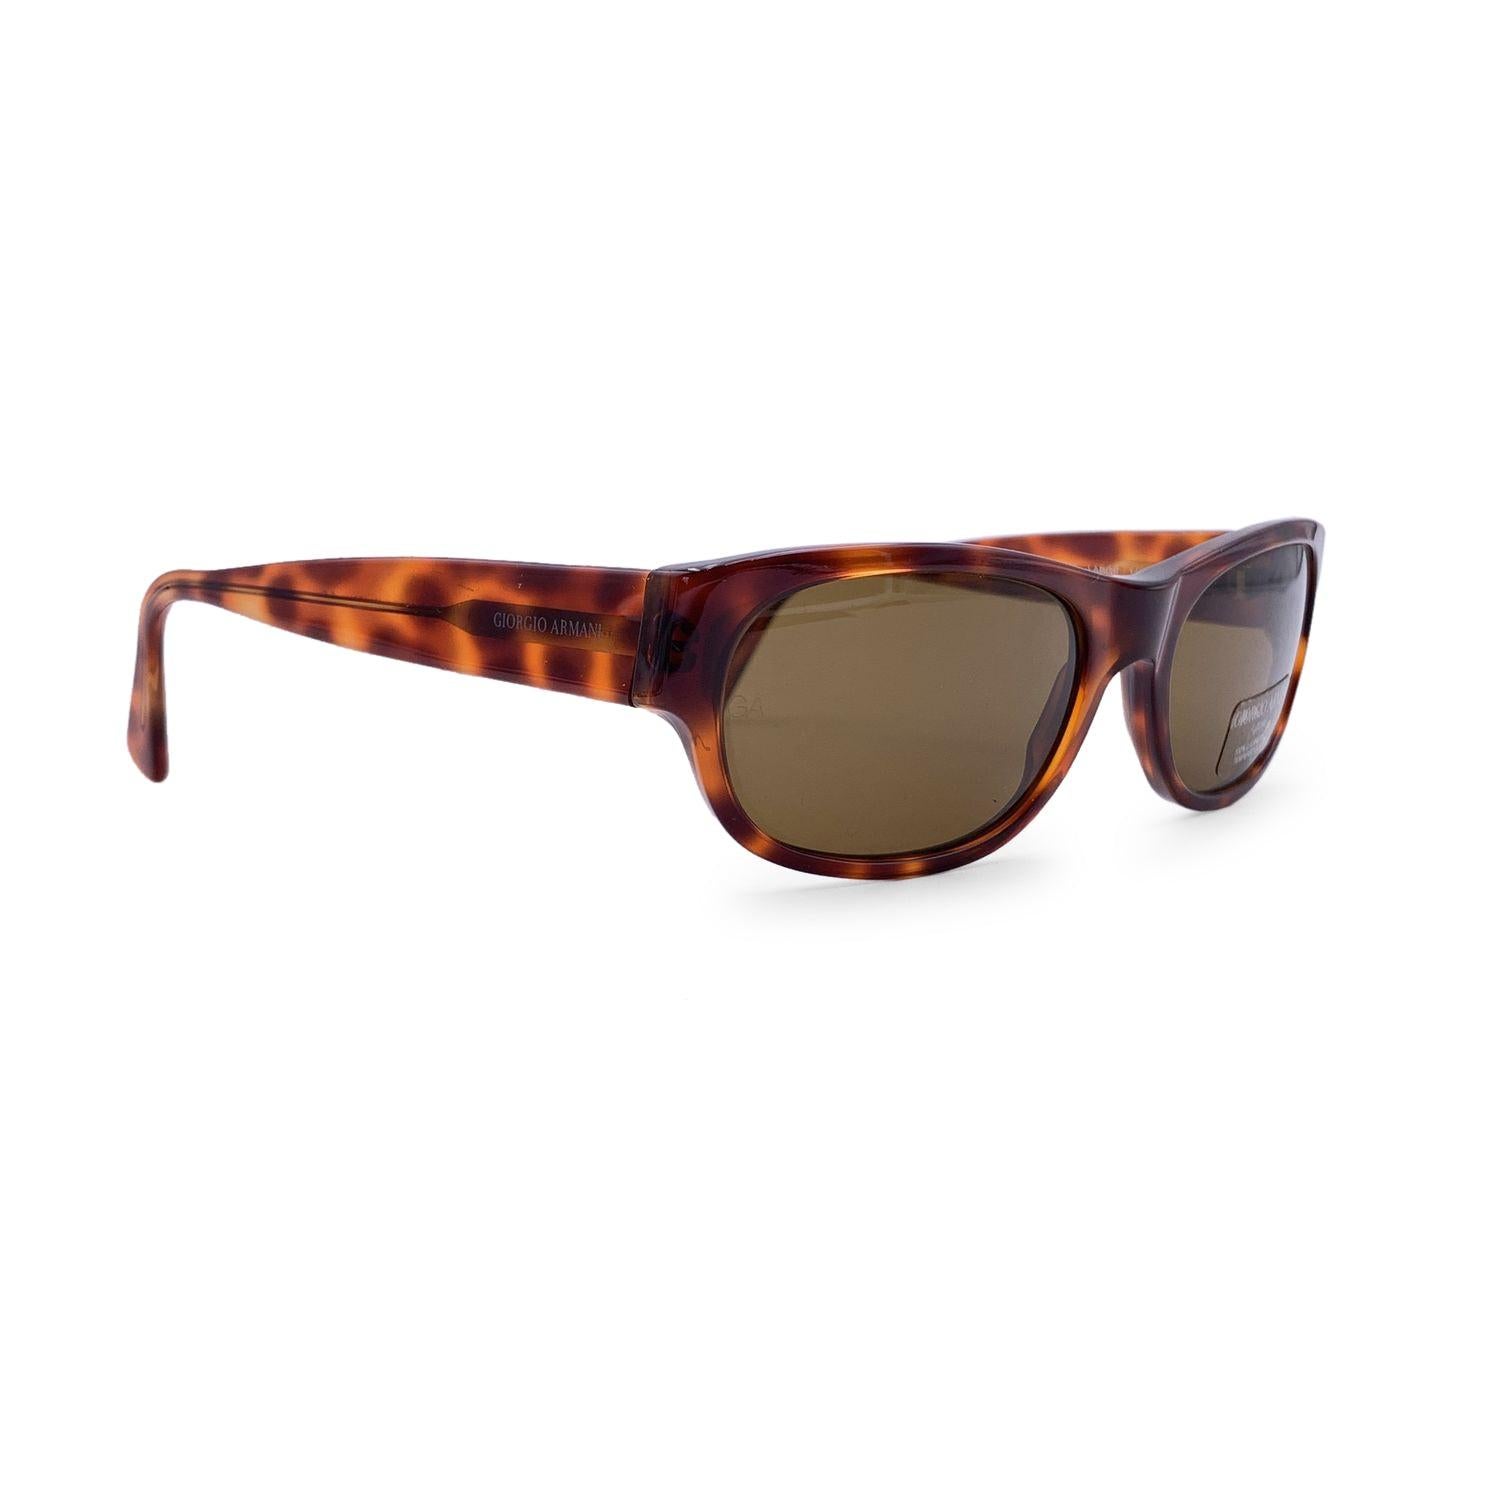 Giorgio Armani Vintage Brown Rectangle Sunglasses 845 050 140 mm In Excellent Condition For Sale In Rome, Rome